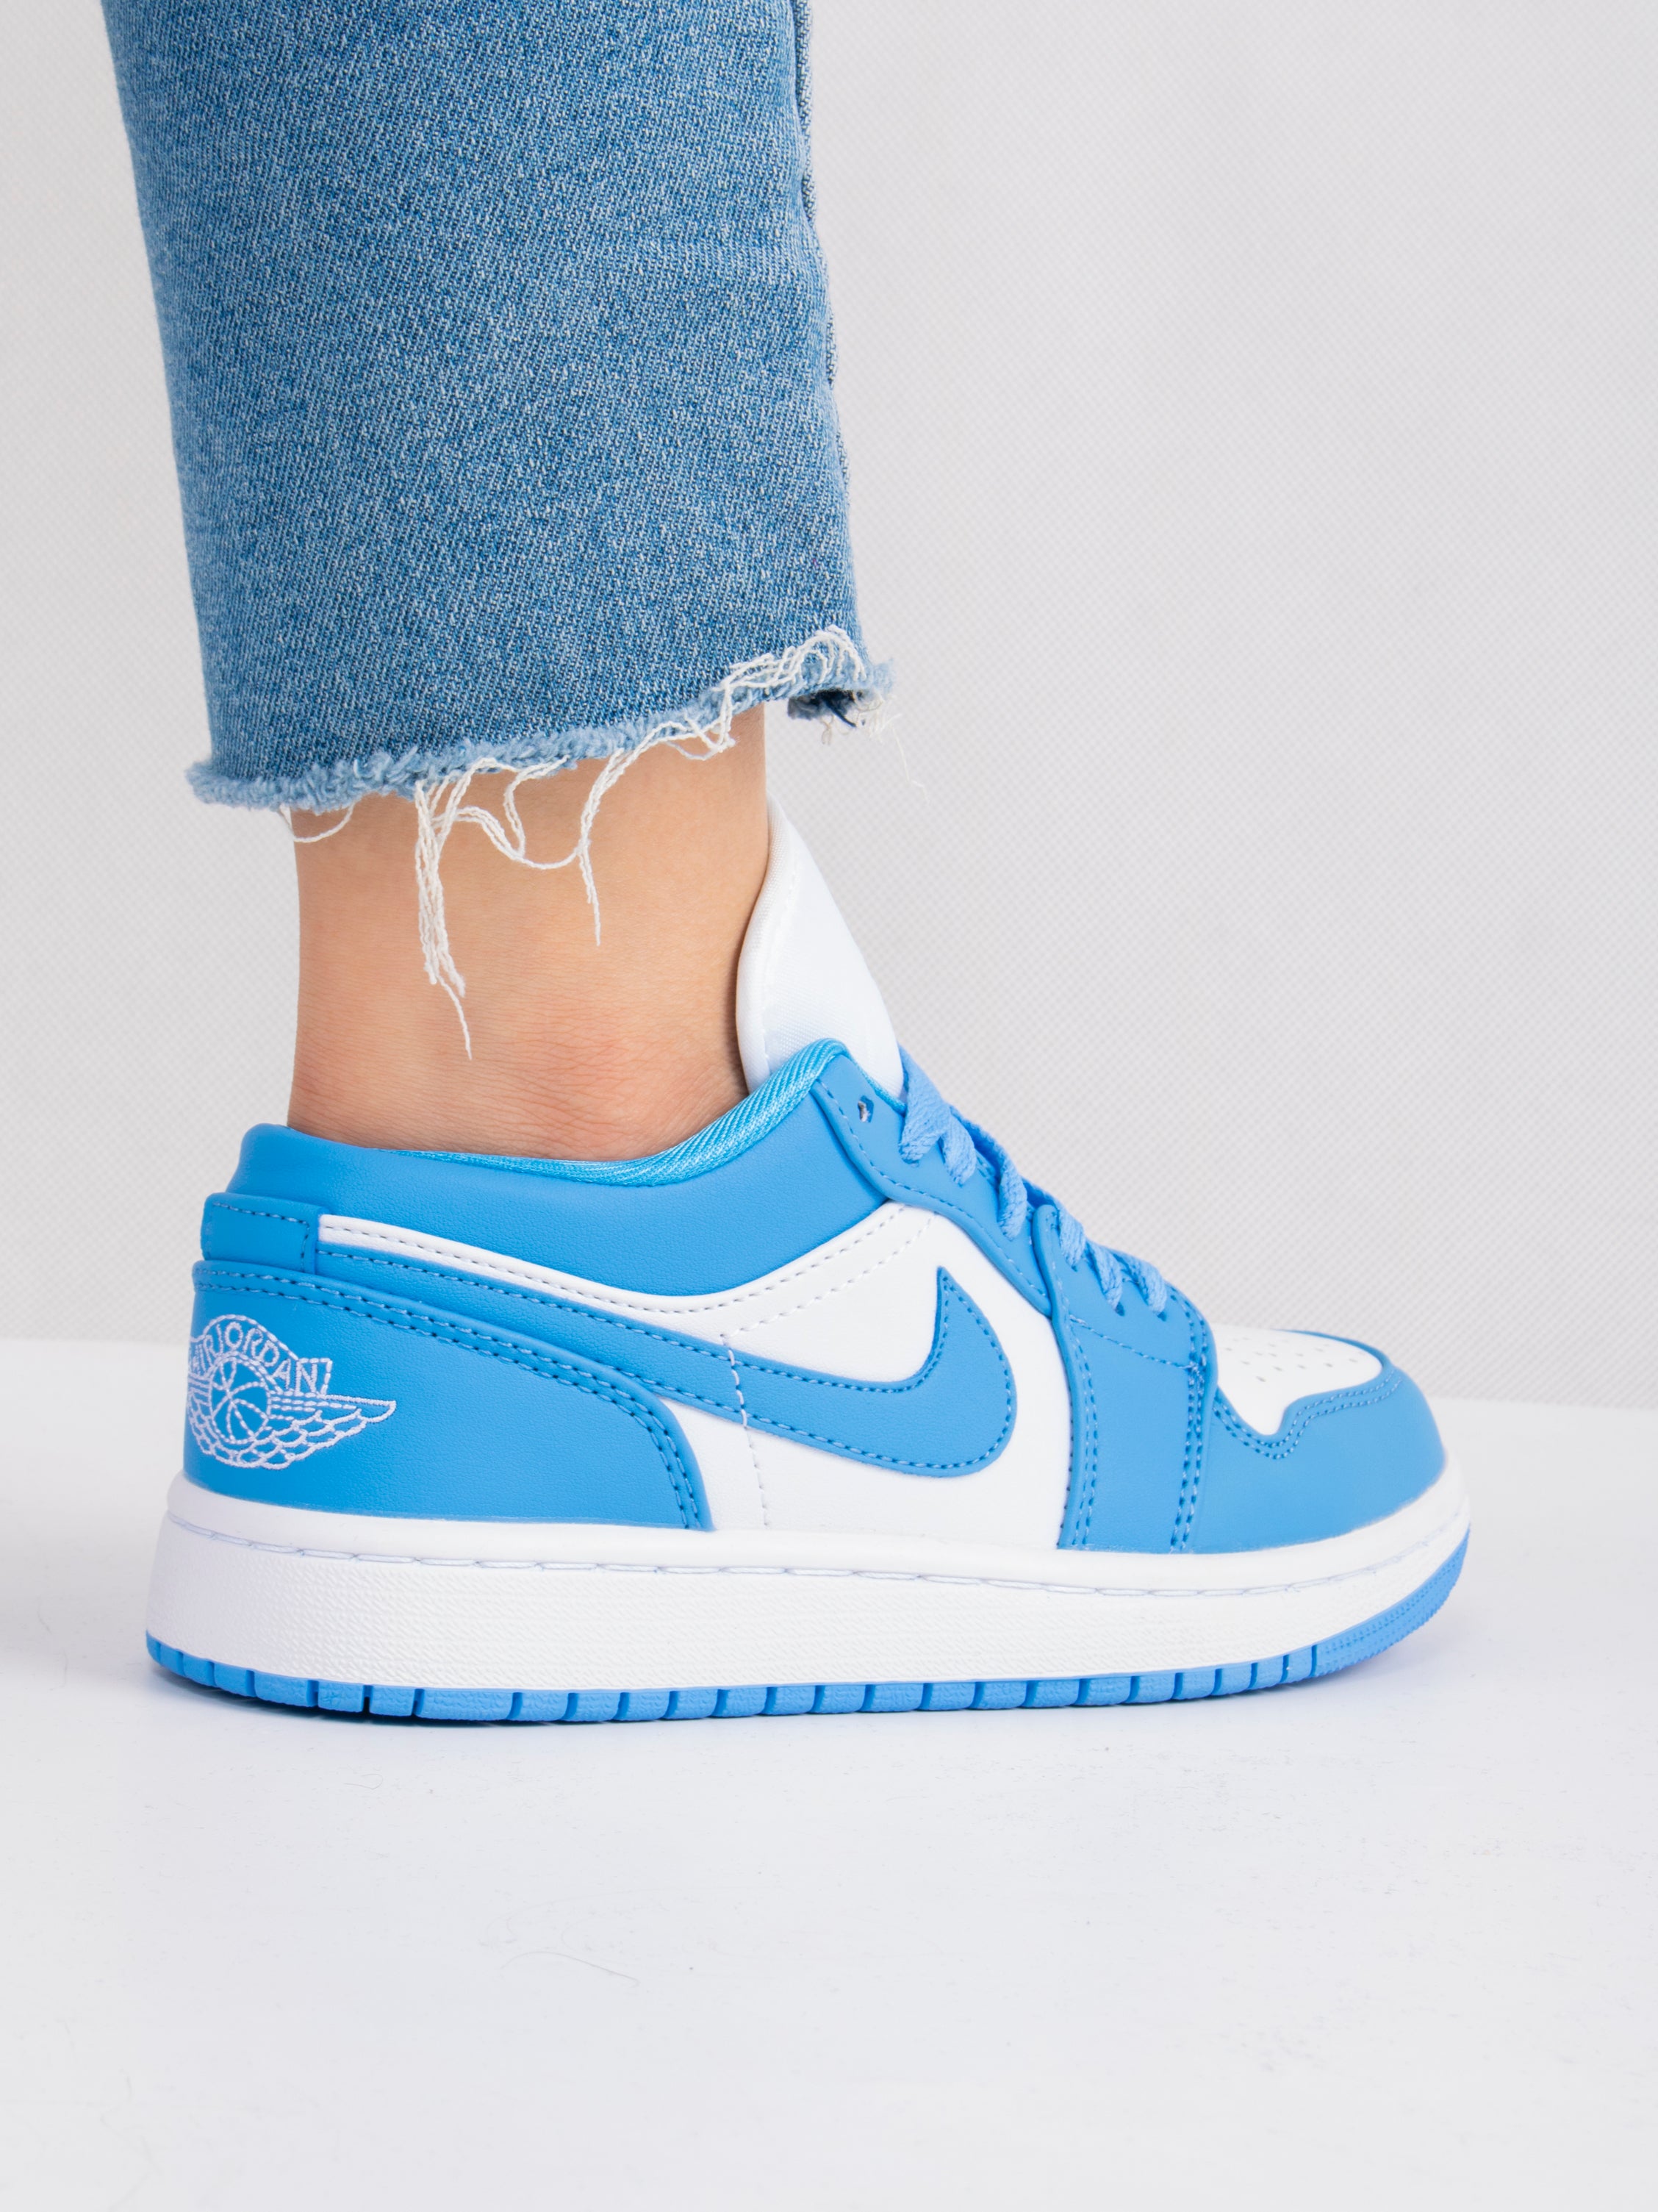 Nike Air Jordan 1 Low trainers in blue & white